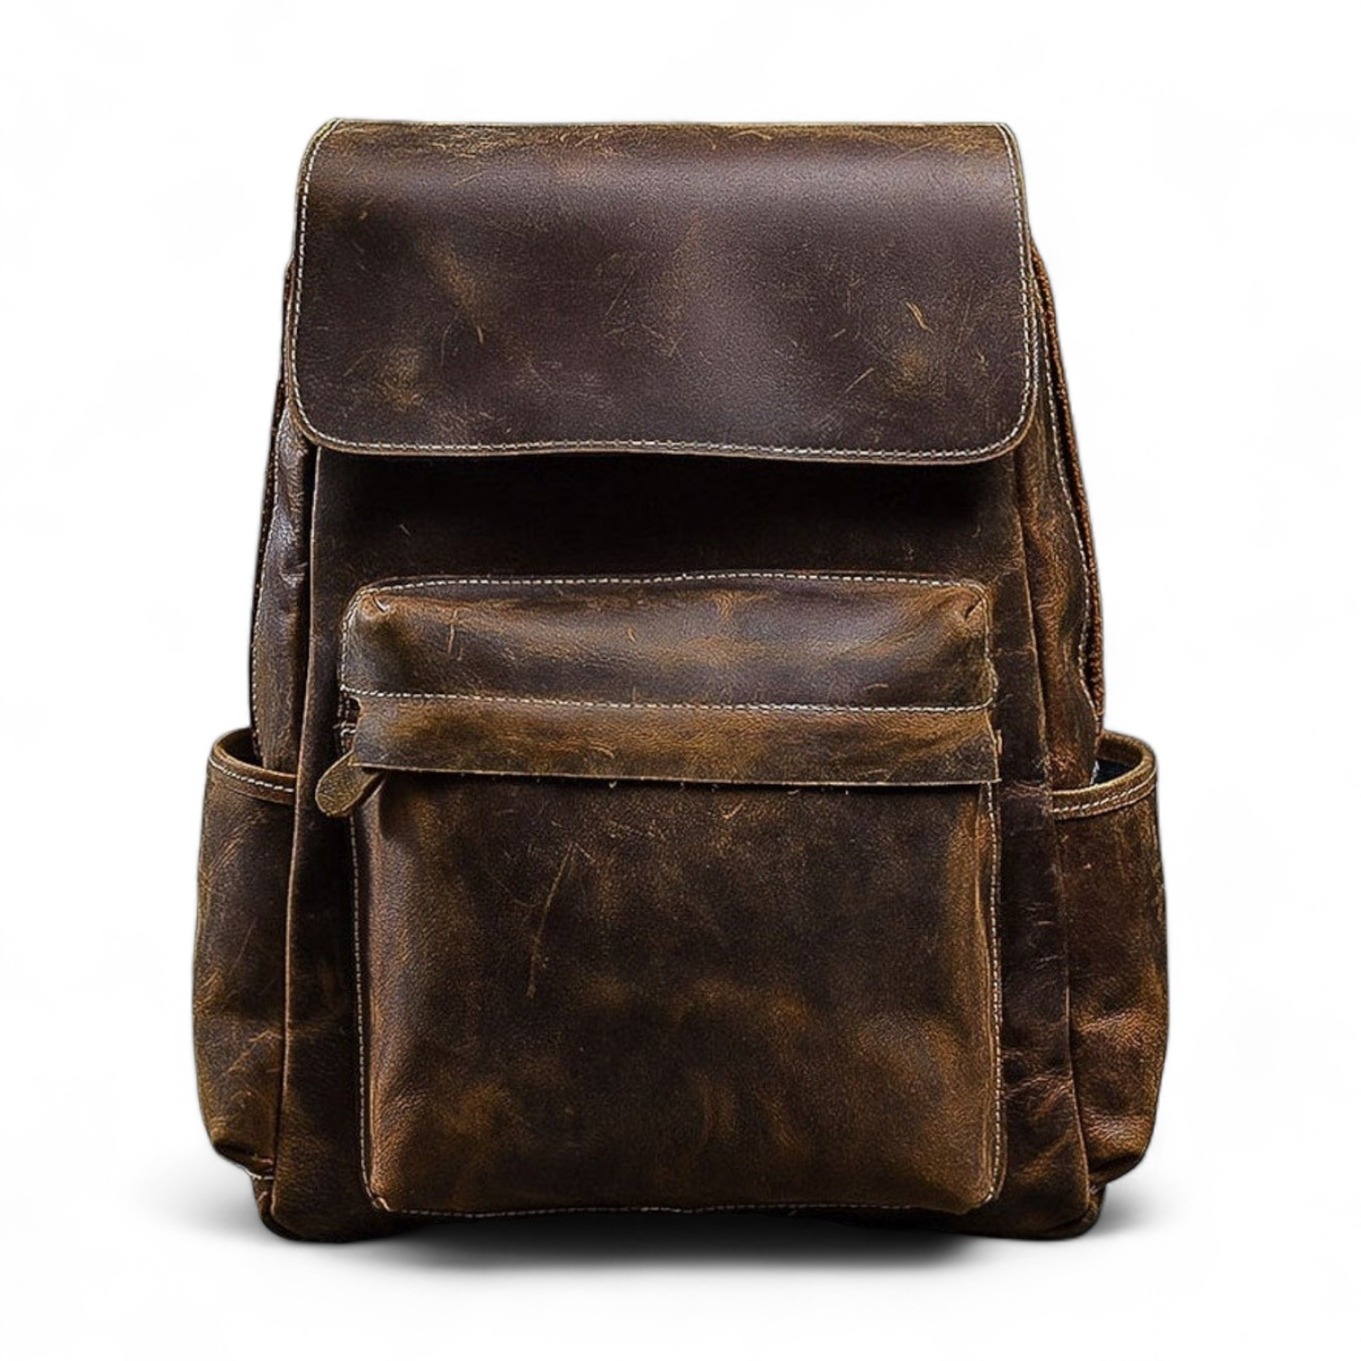 Seeker Leather Backpack